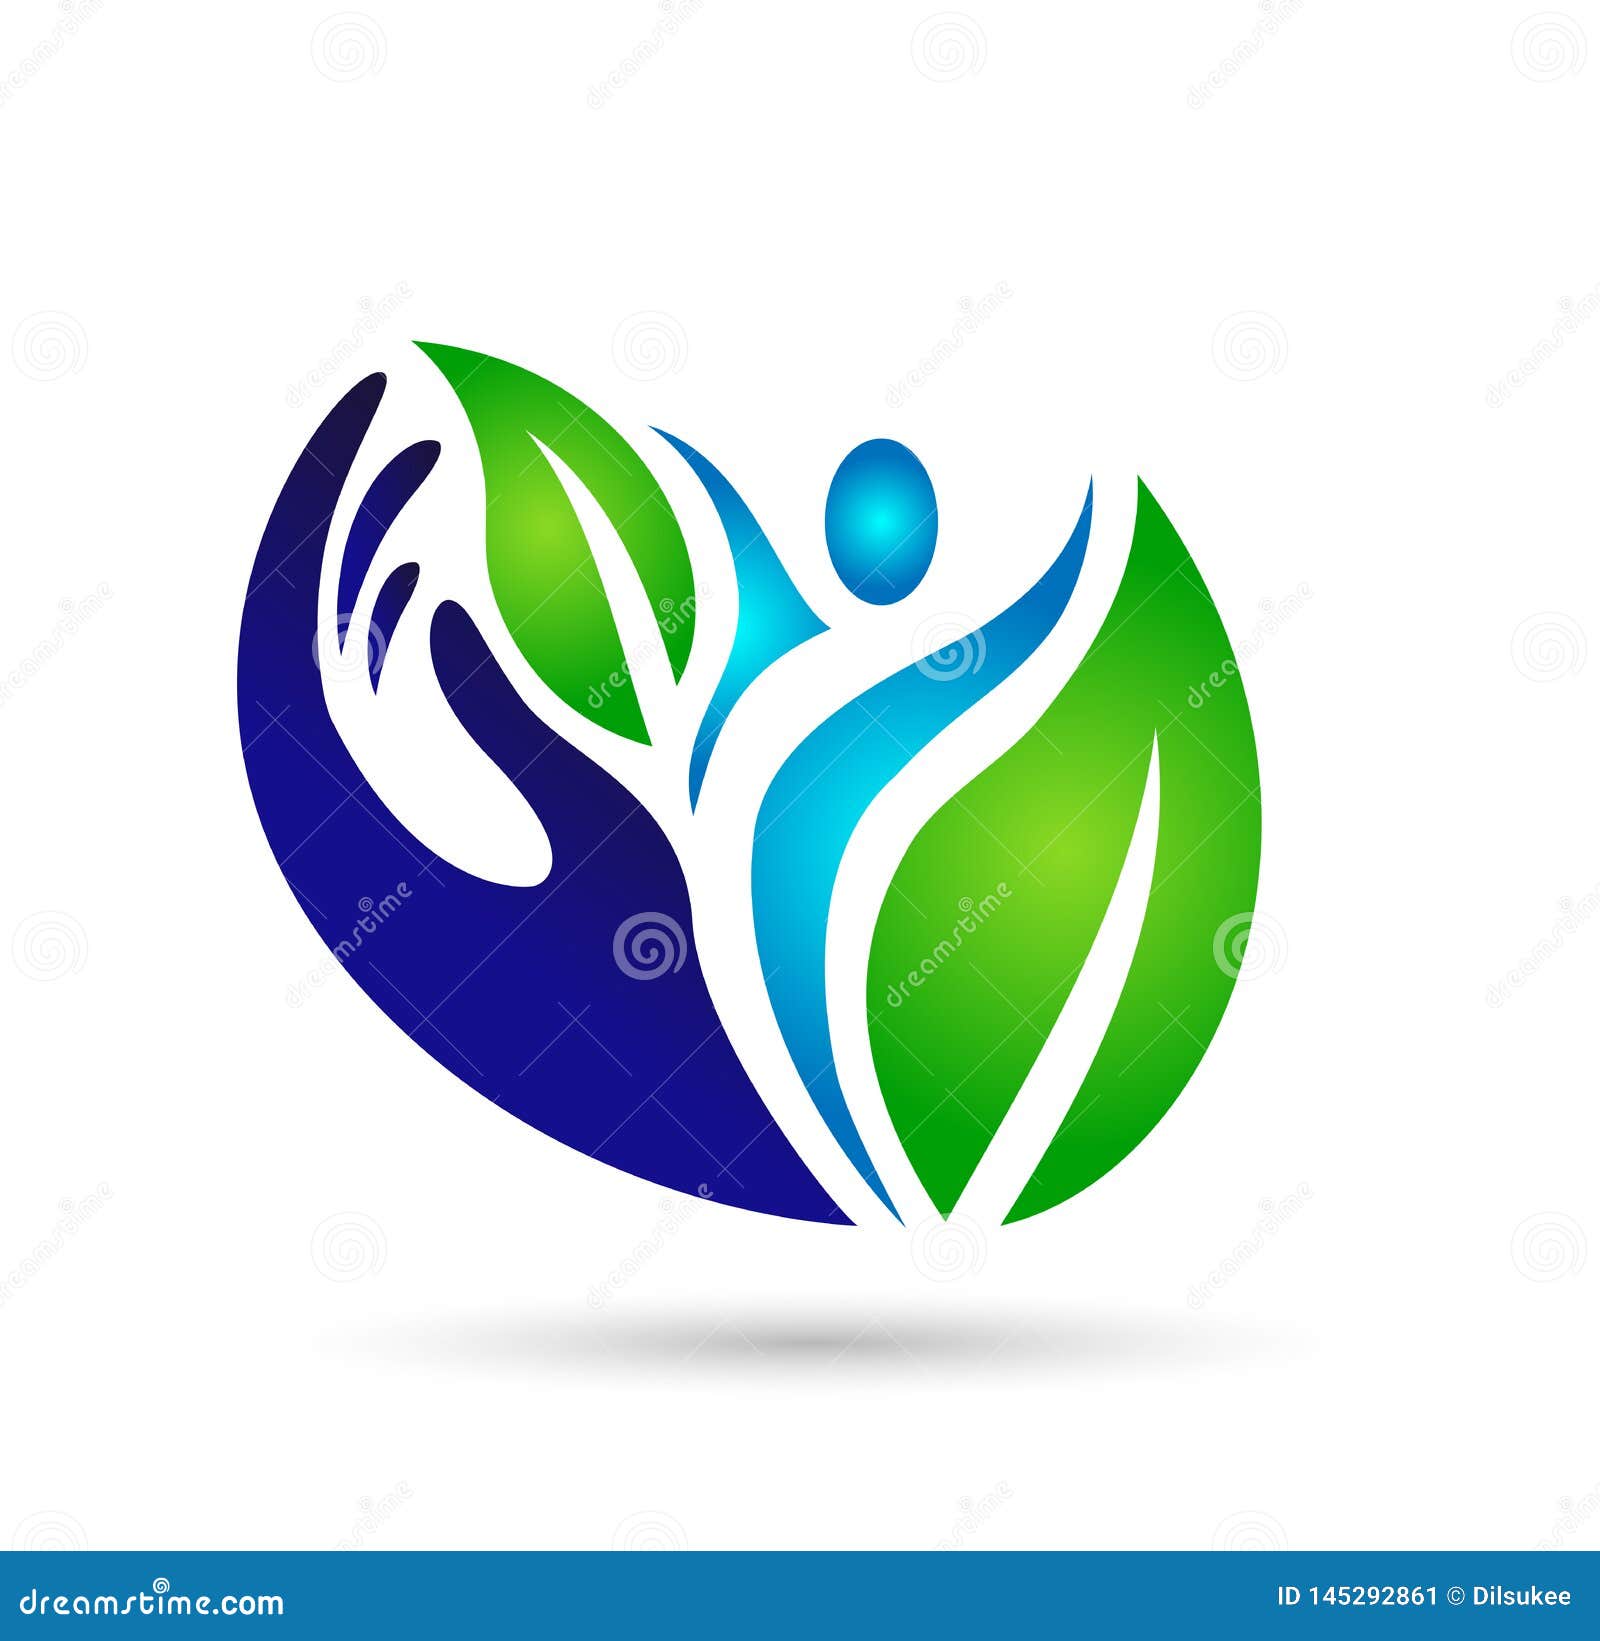 Get Environmental Logos | Save Environment Icons | LogoDesign.net